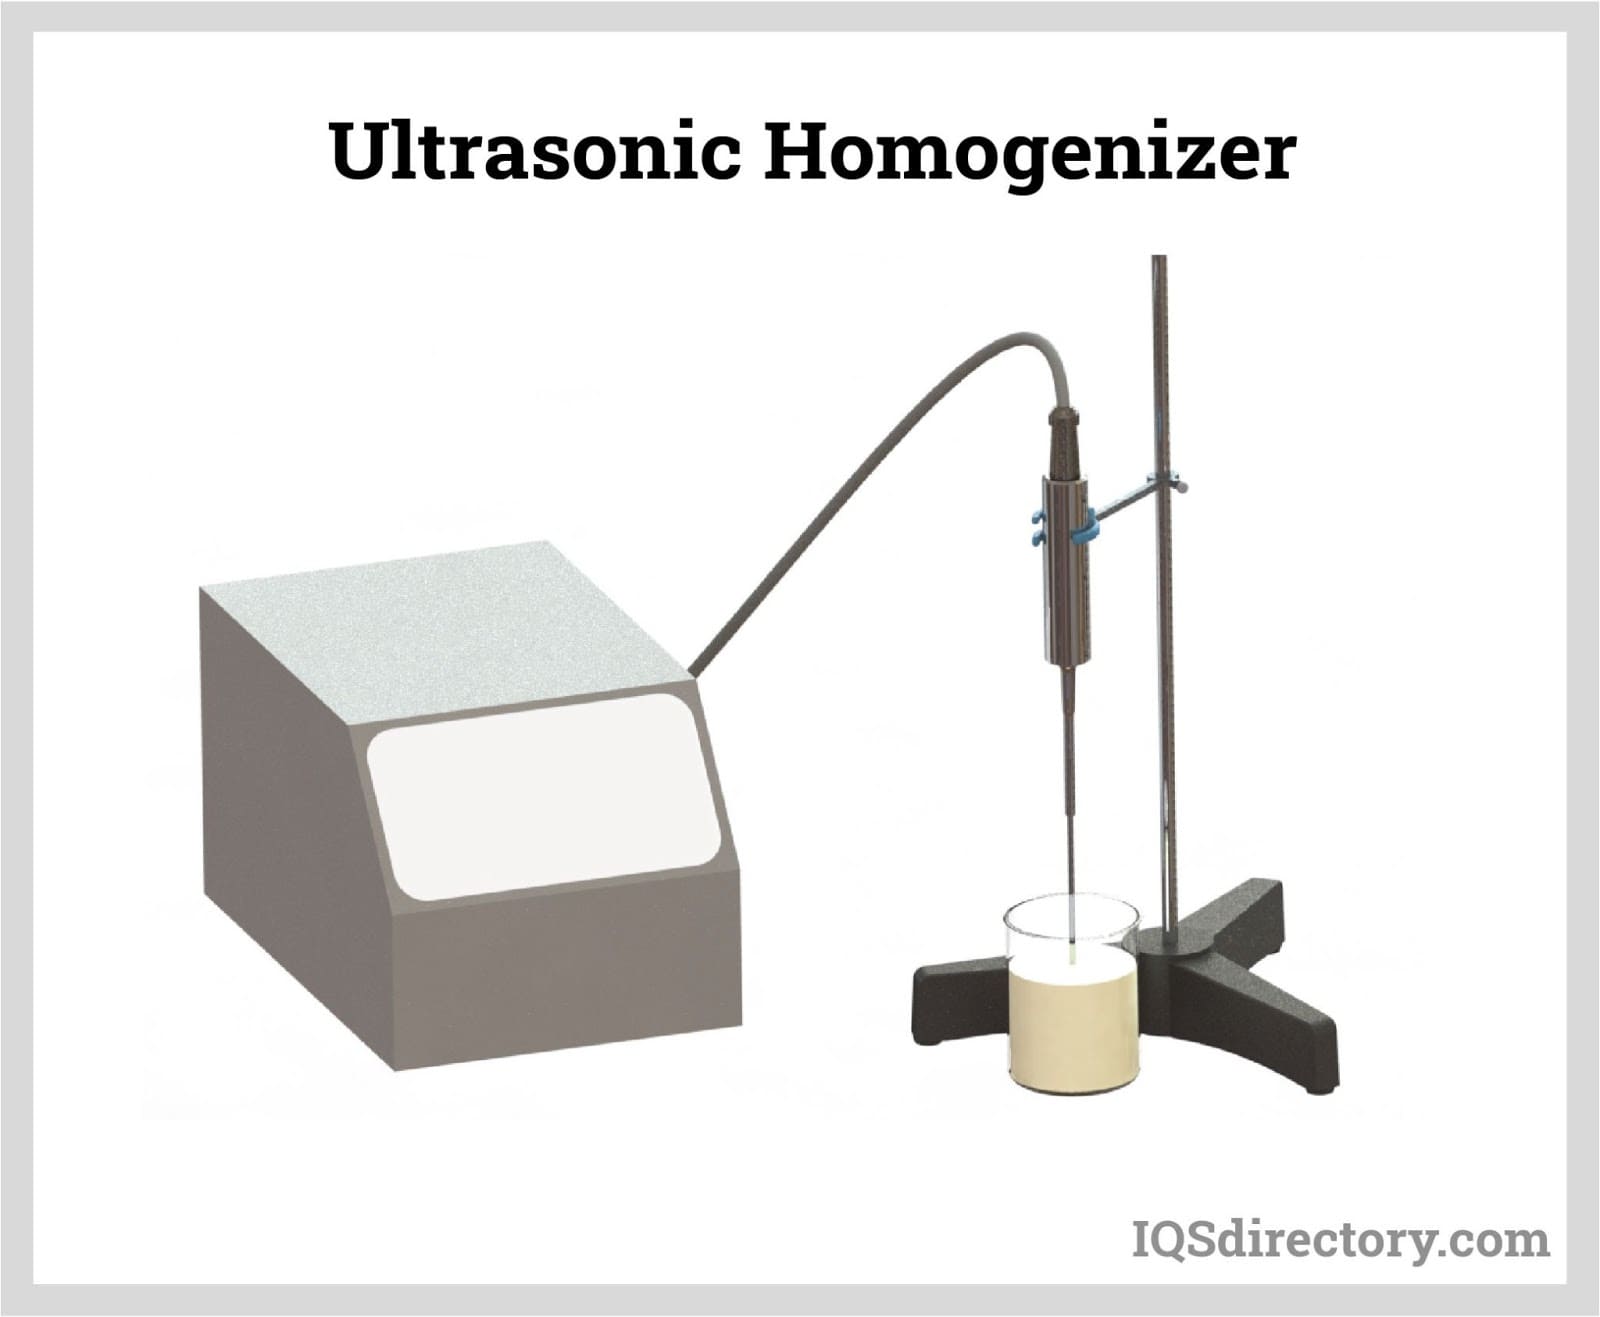 Ultrasonic Homogenizer